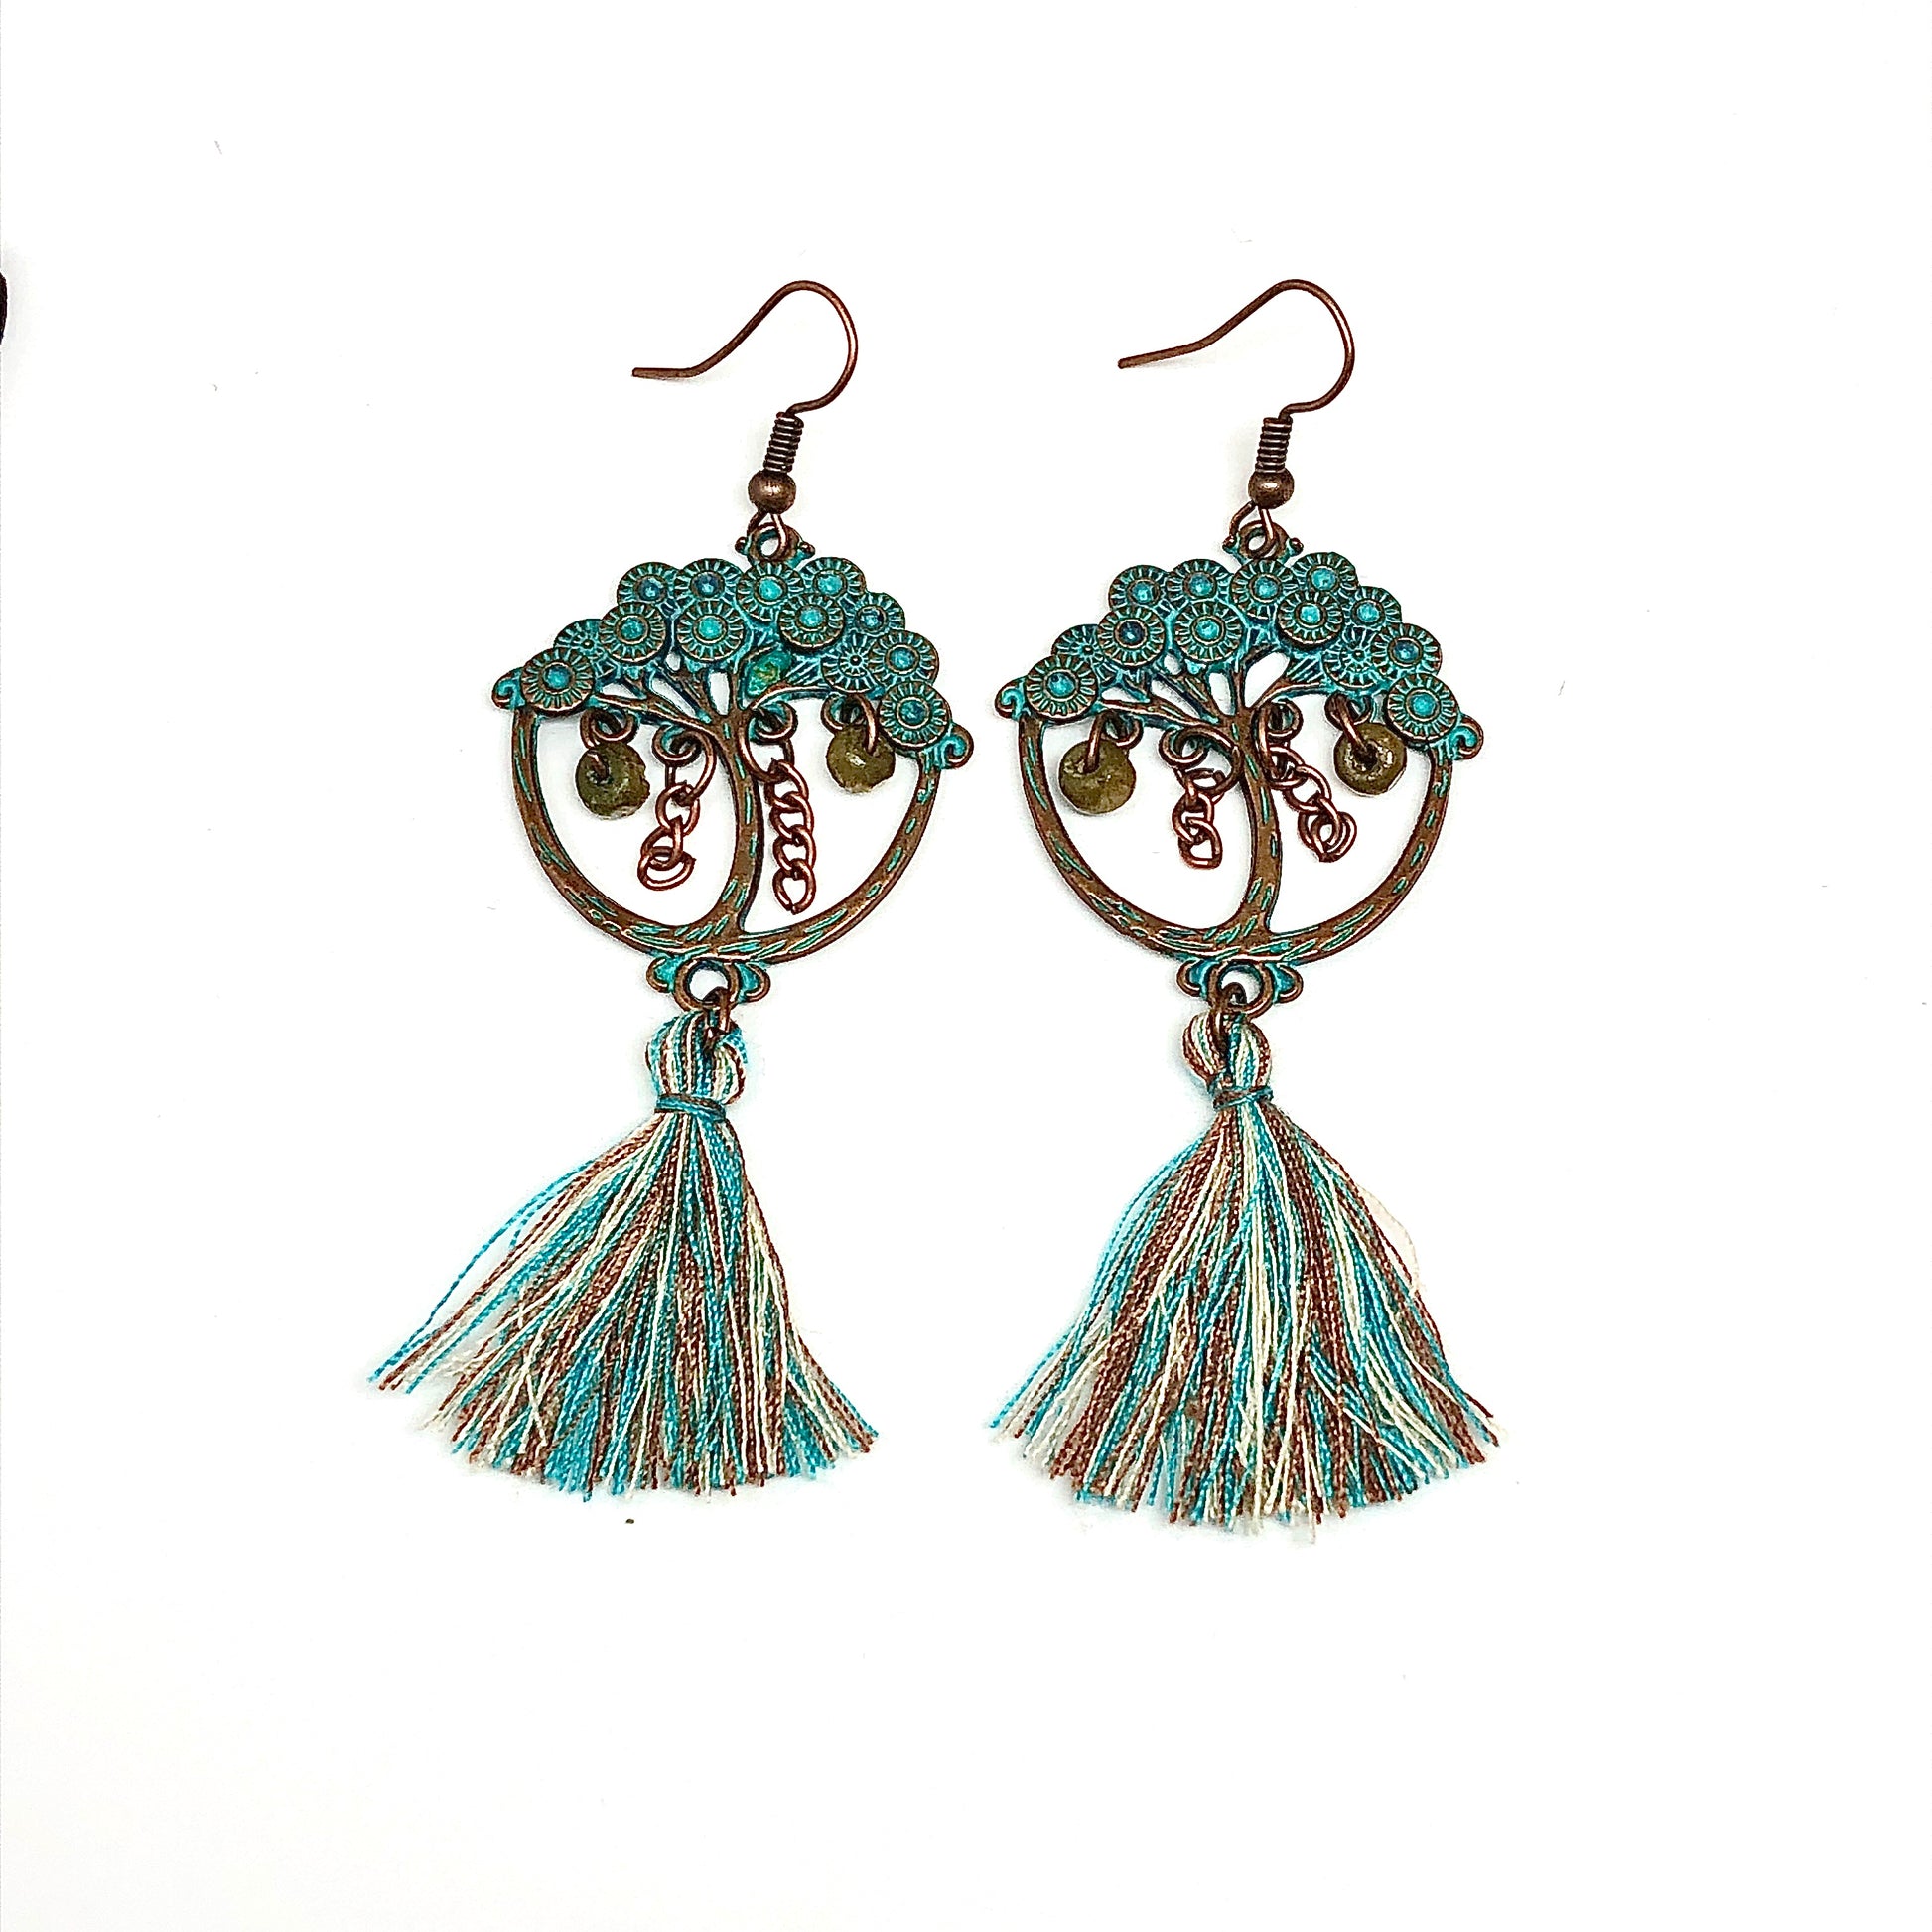 3in Long Tassel Earrings Ethnic Japanese Bonsai Tree in Rustic Copper Turquoise | New Boho Style